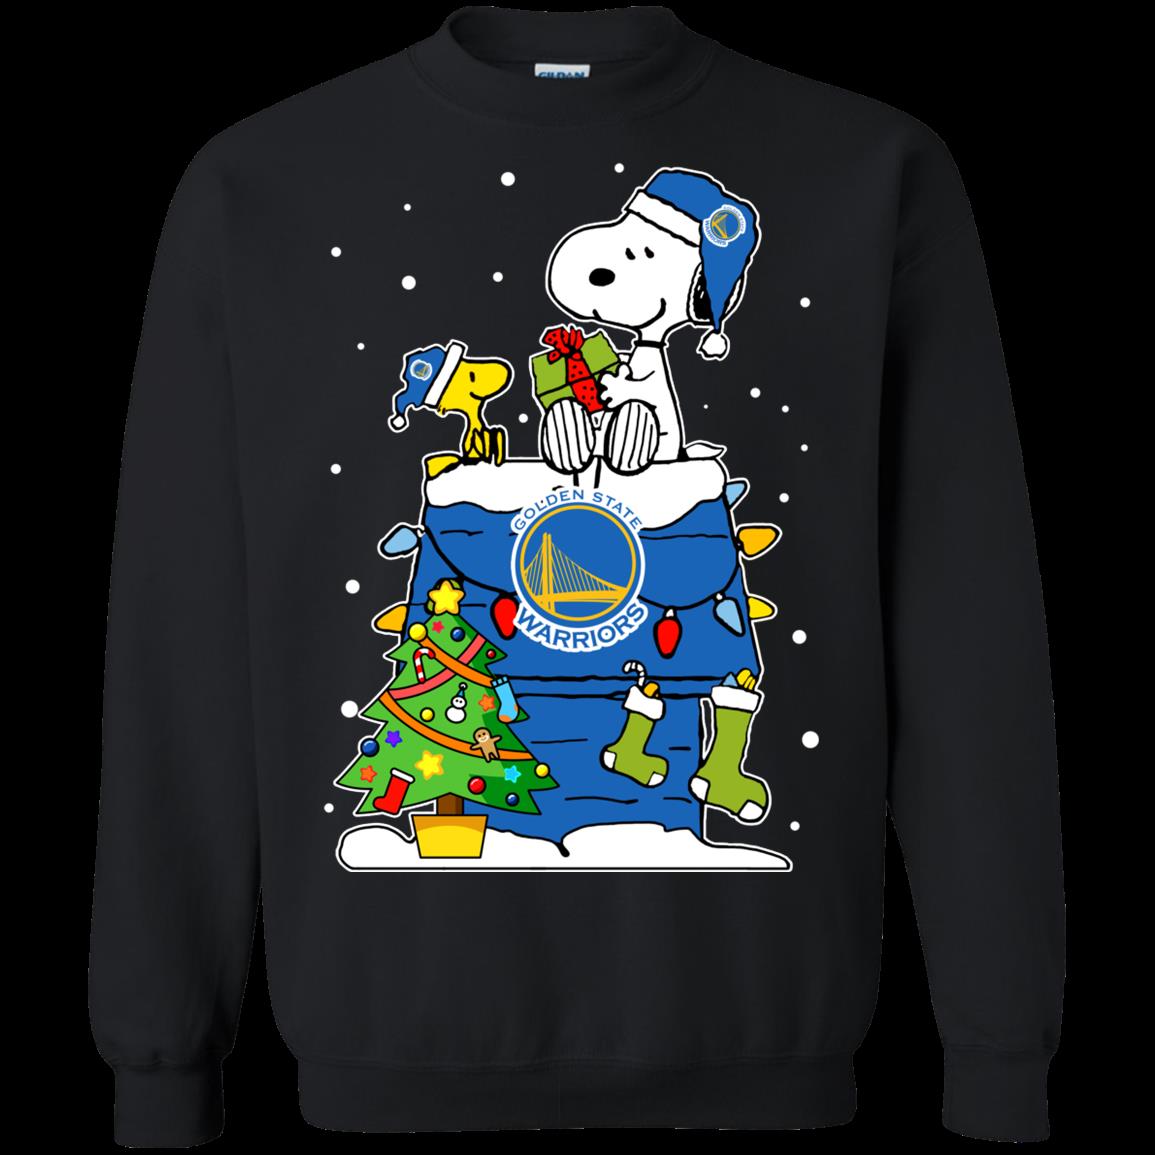 Golden State Warriors Ugly Christmas Sweaters Snoopy Hoodies Sweatshirts